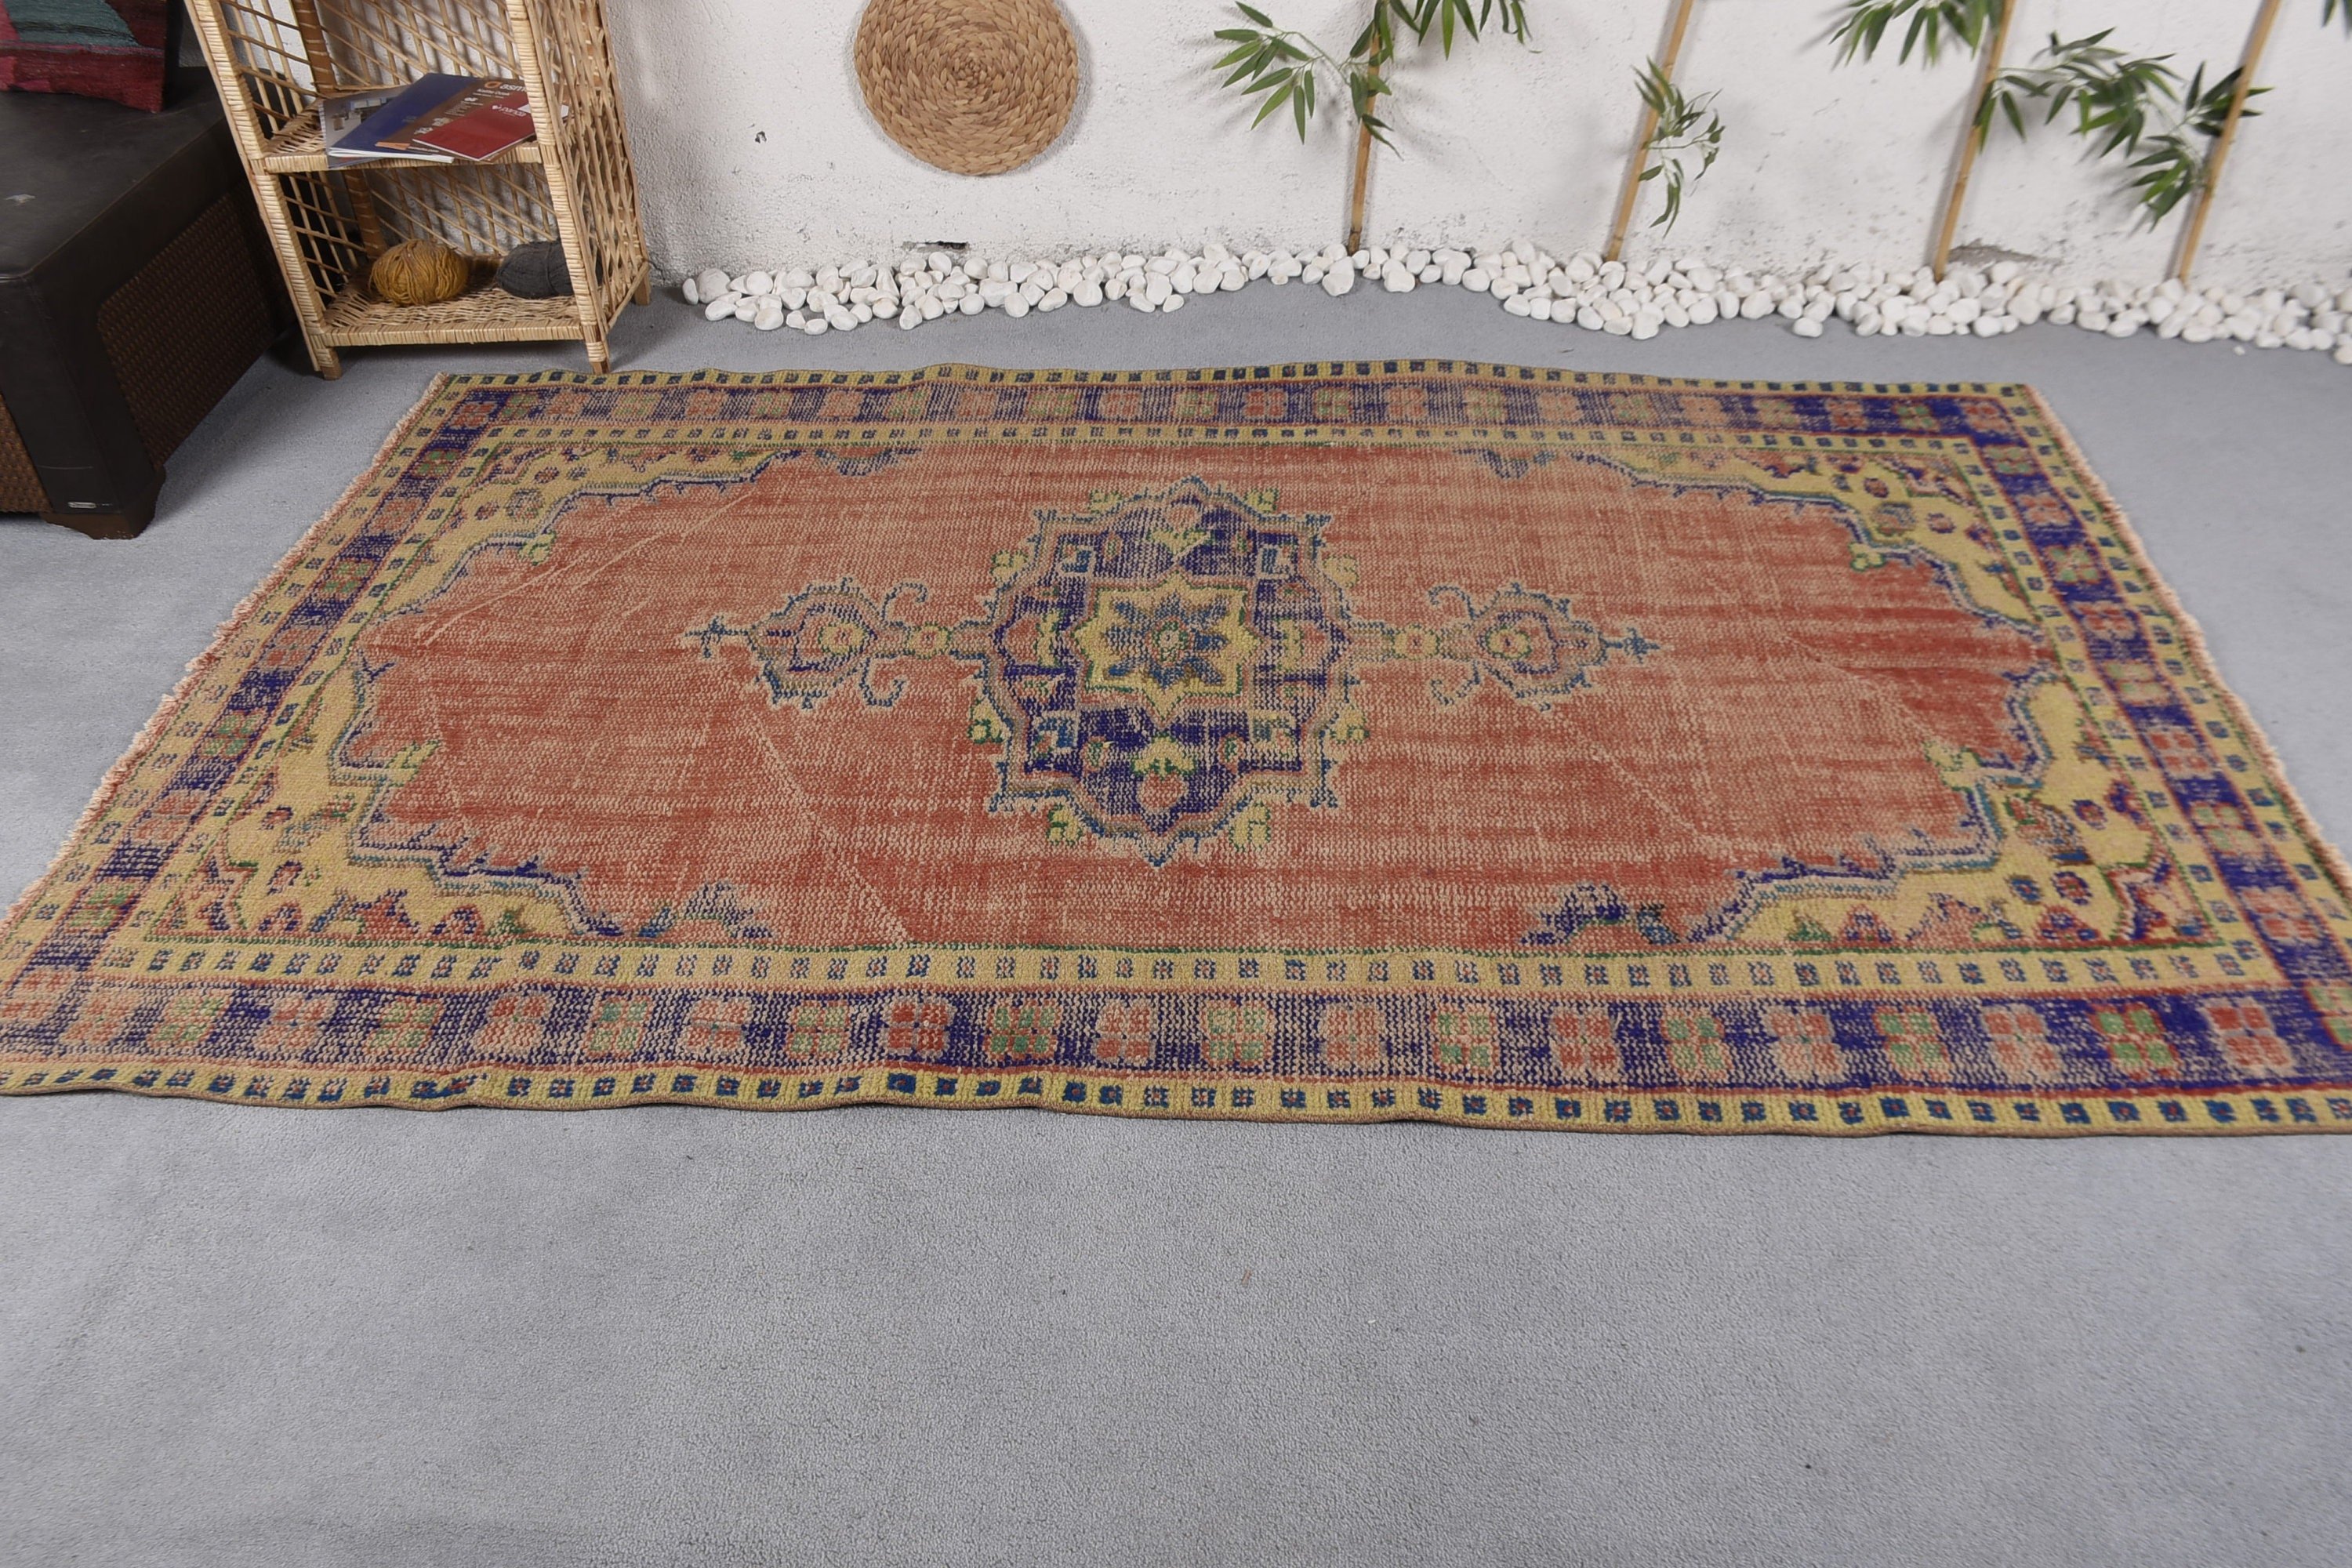 4.9x8.3 ft Large Rug, Moroccan Rug, Turkish Rug, Bedroom Rugs, Red Antique Rug, Vintage Rug, Dining Room Rug, Wool Rugs, Vintage Decor Rug